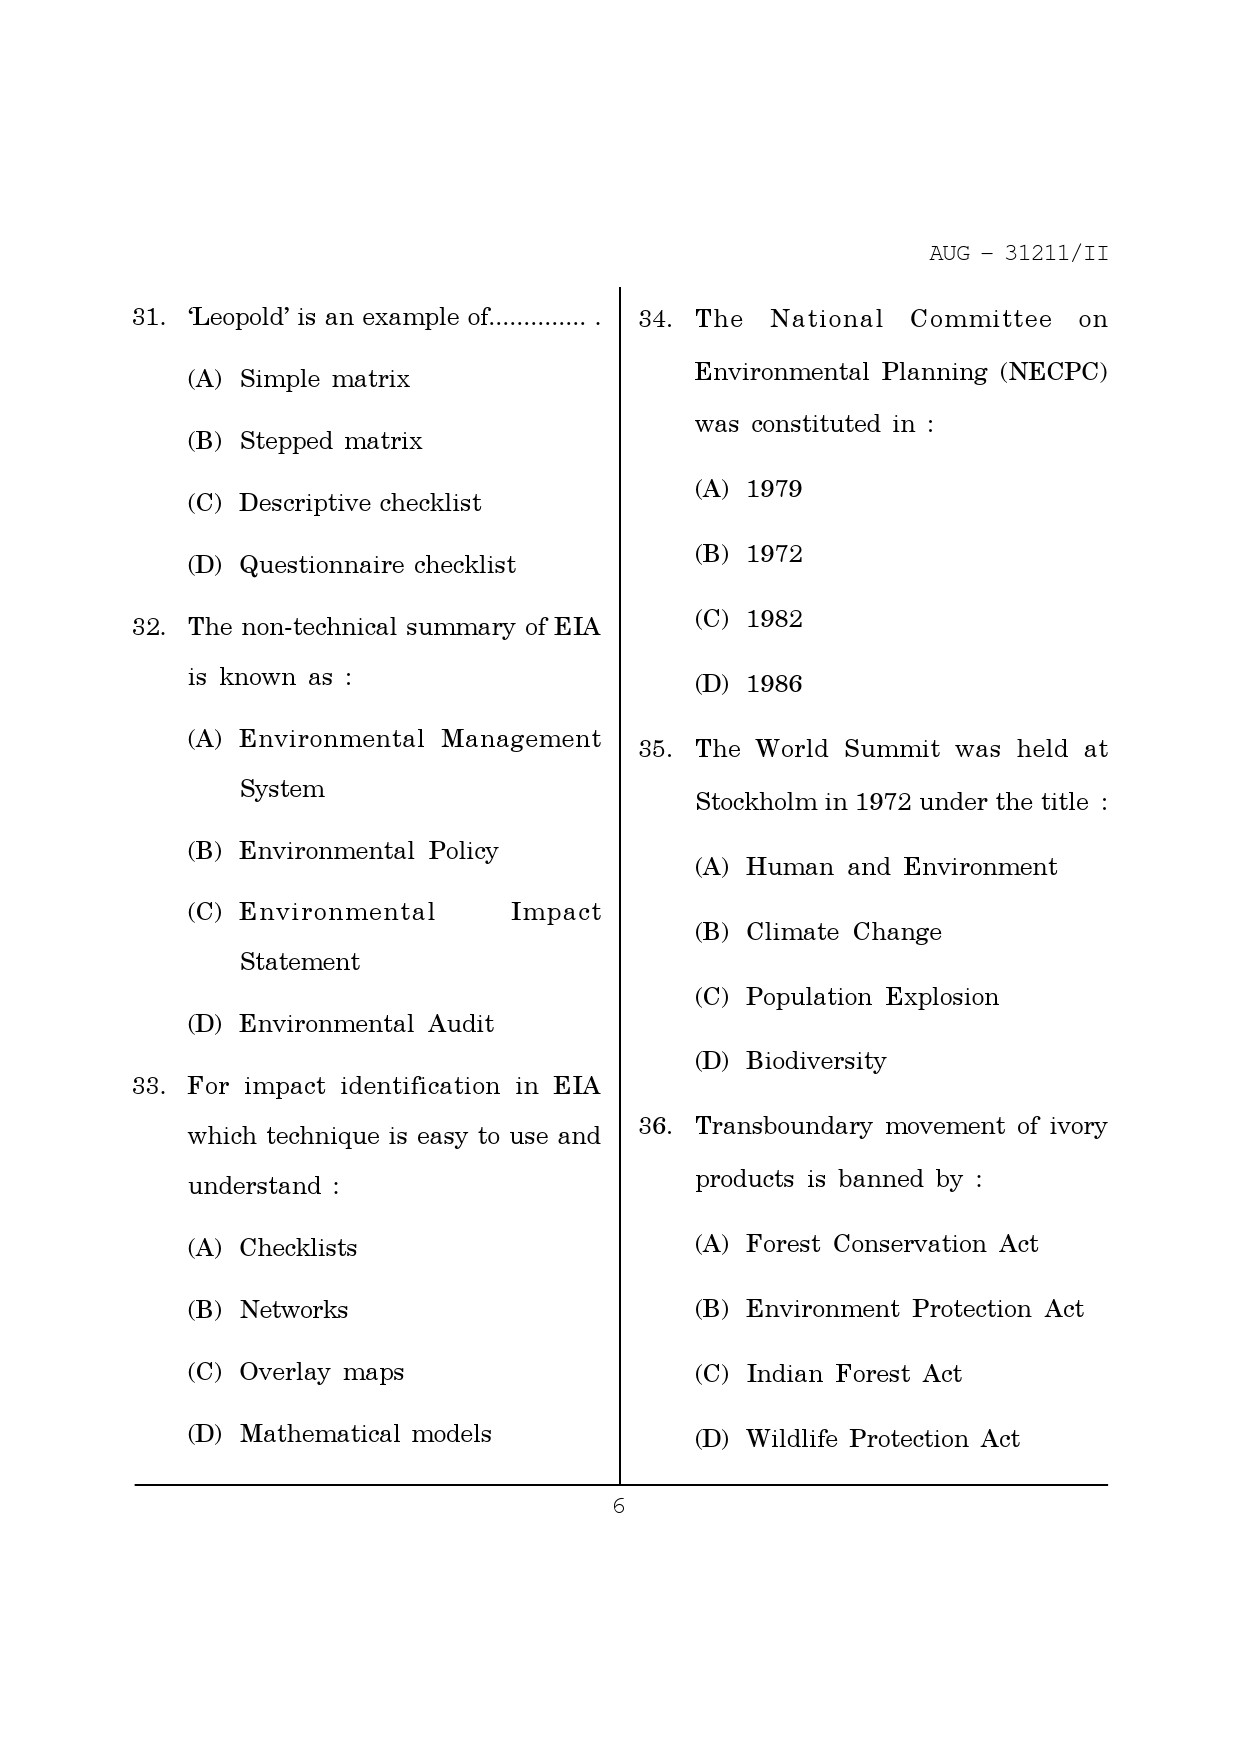 Maharashtra SET Environmental Sciences Question Paper II August 2011 6